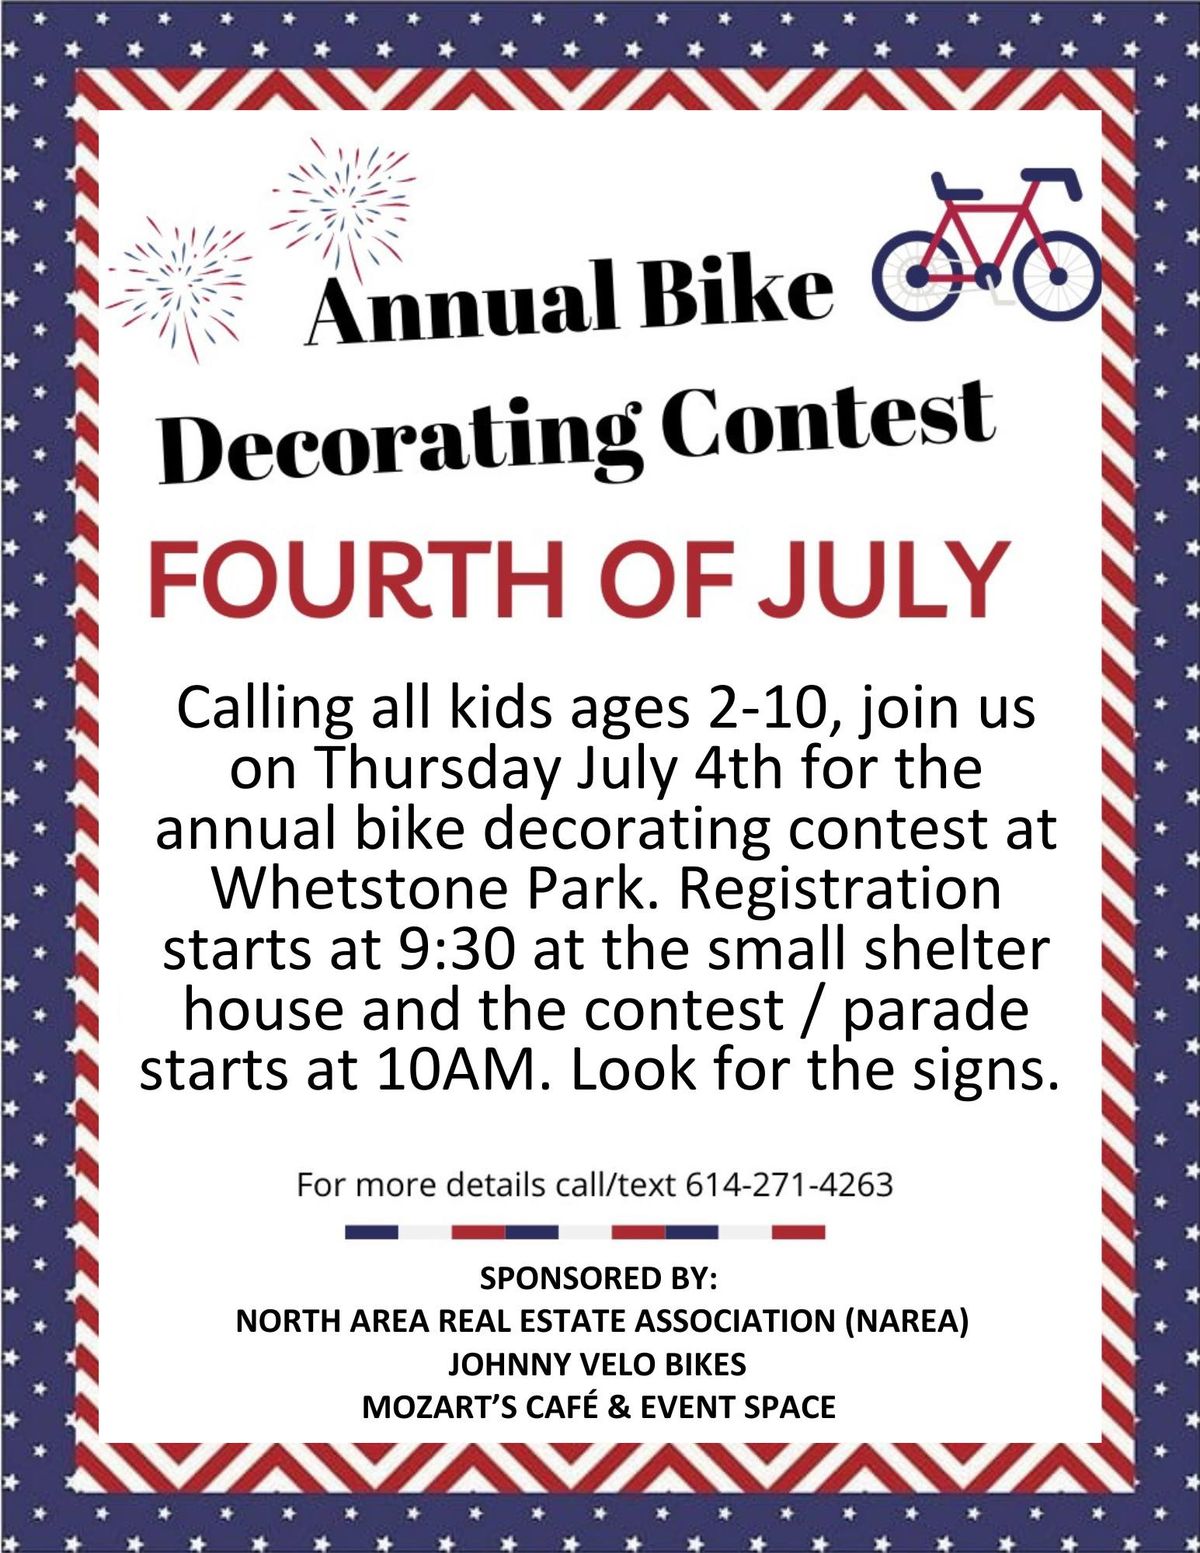 Annual Bike Decorating Contest